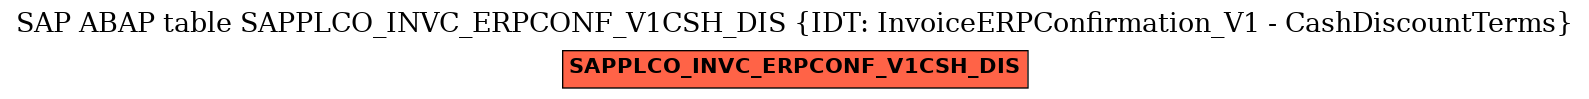 E-R Diagram for table SAPPLCO_INVC_ERPCONF_V1CSH_DIS (IDT: InvoiceERPConfirmation_V1 - CashDiscountTerms)